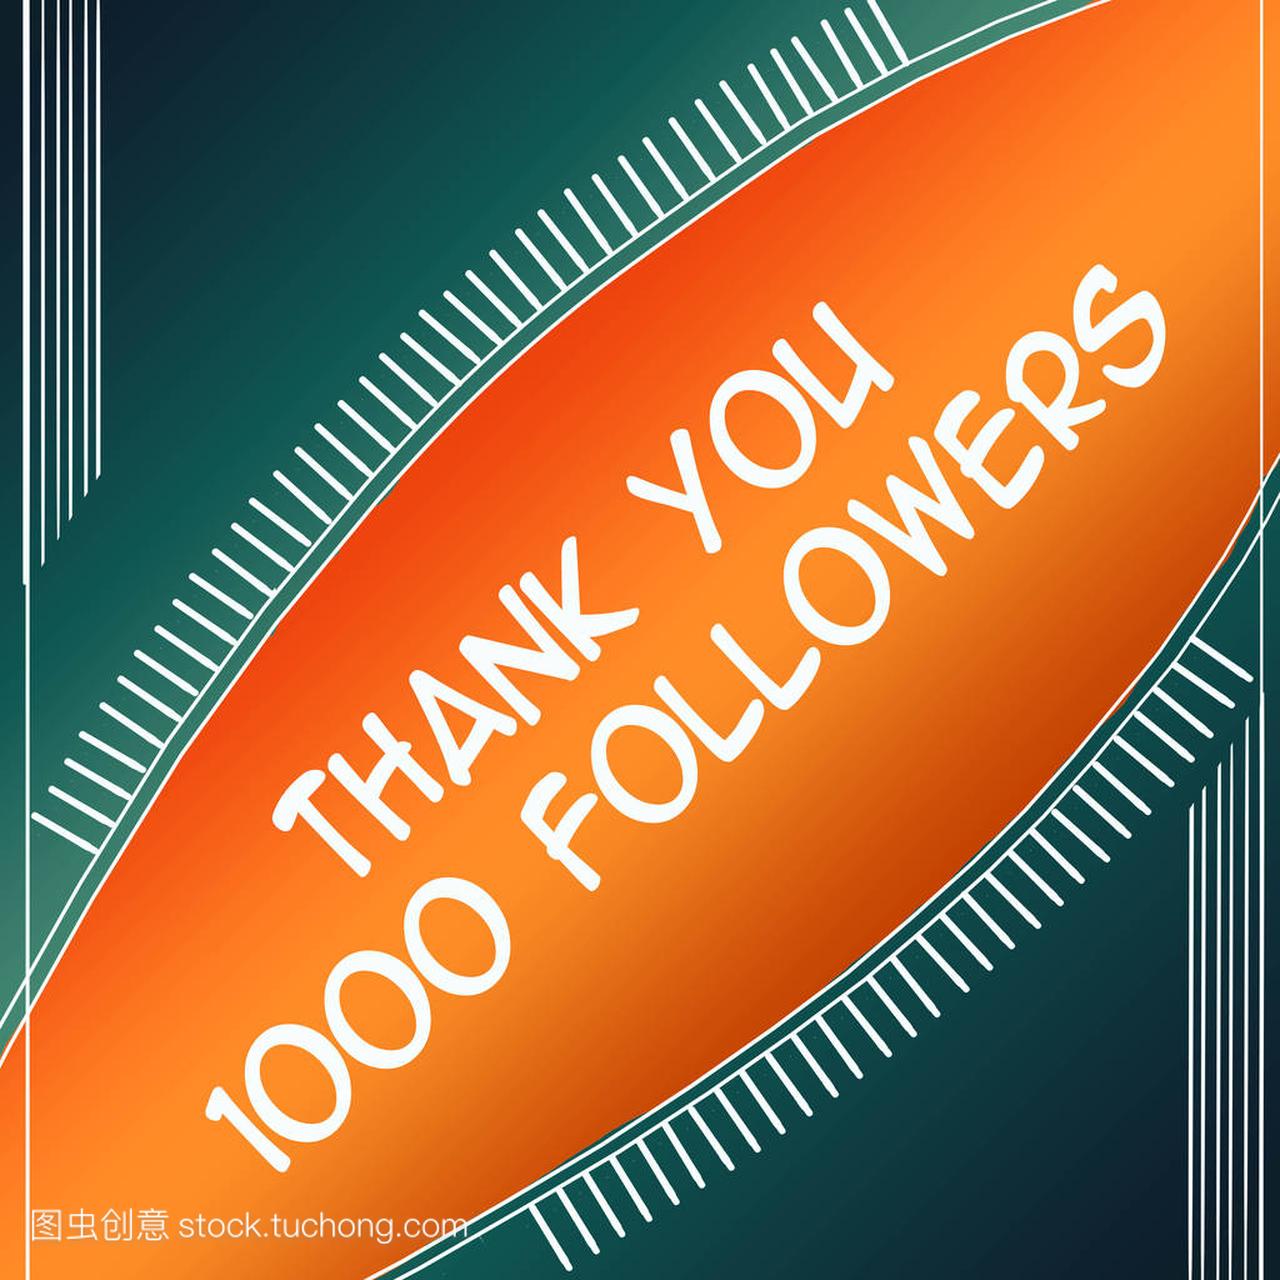 thank followers 1000 orange